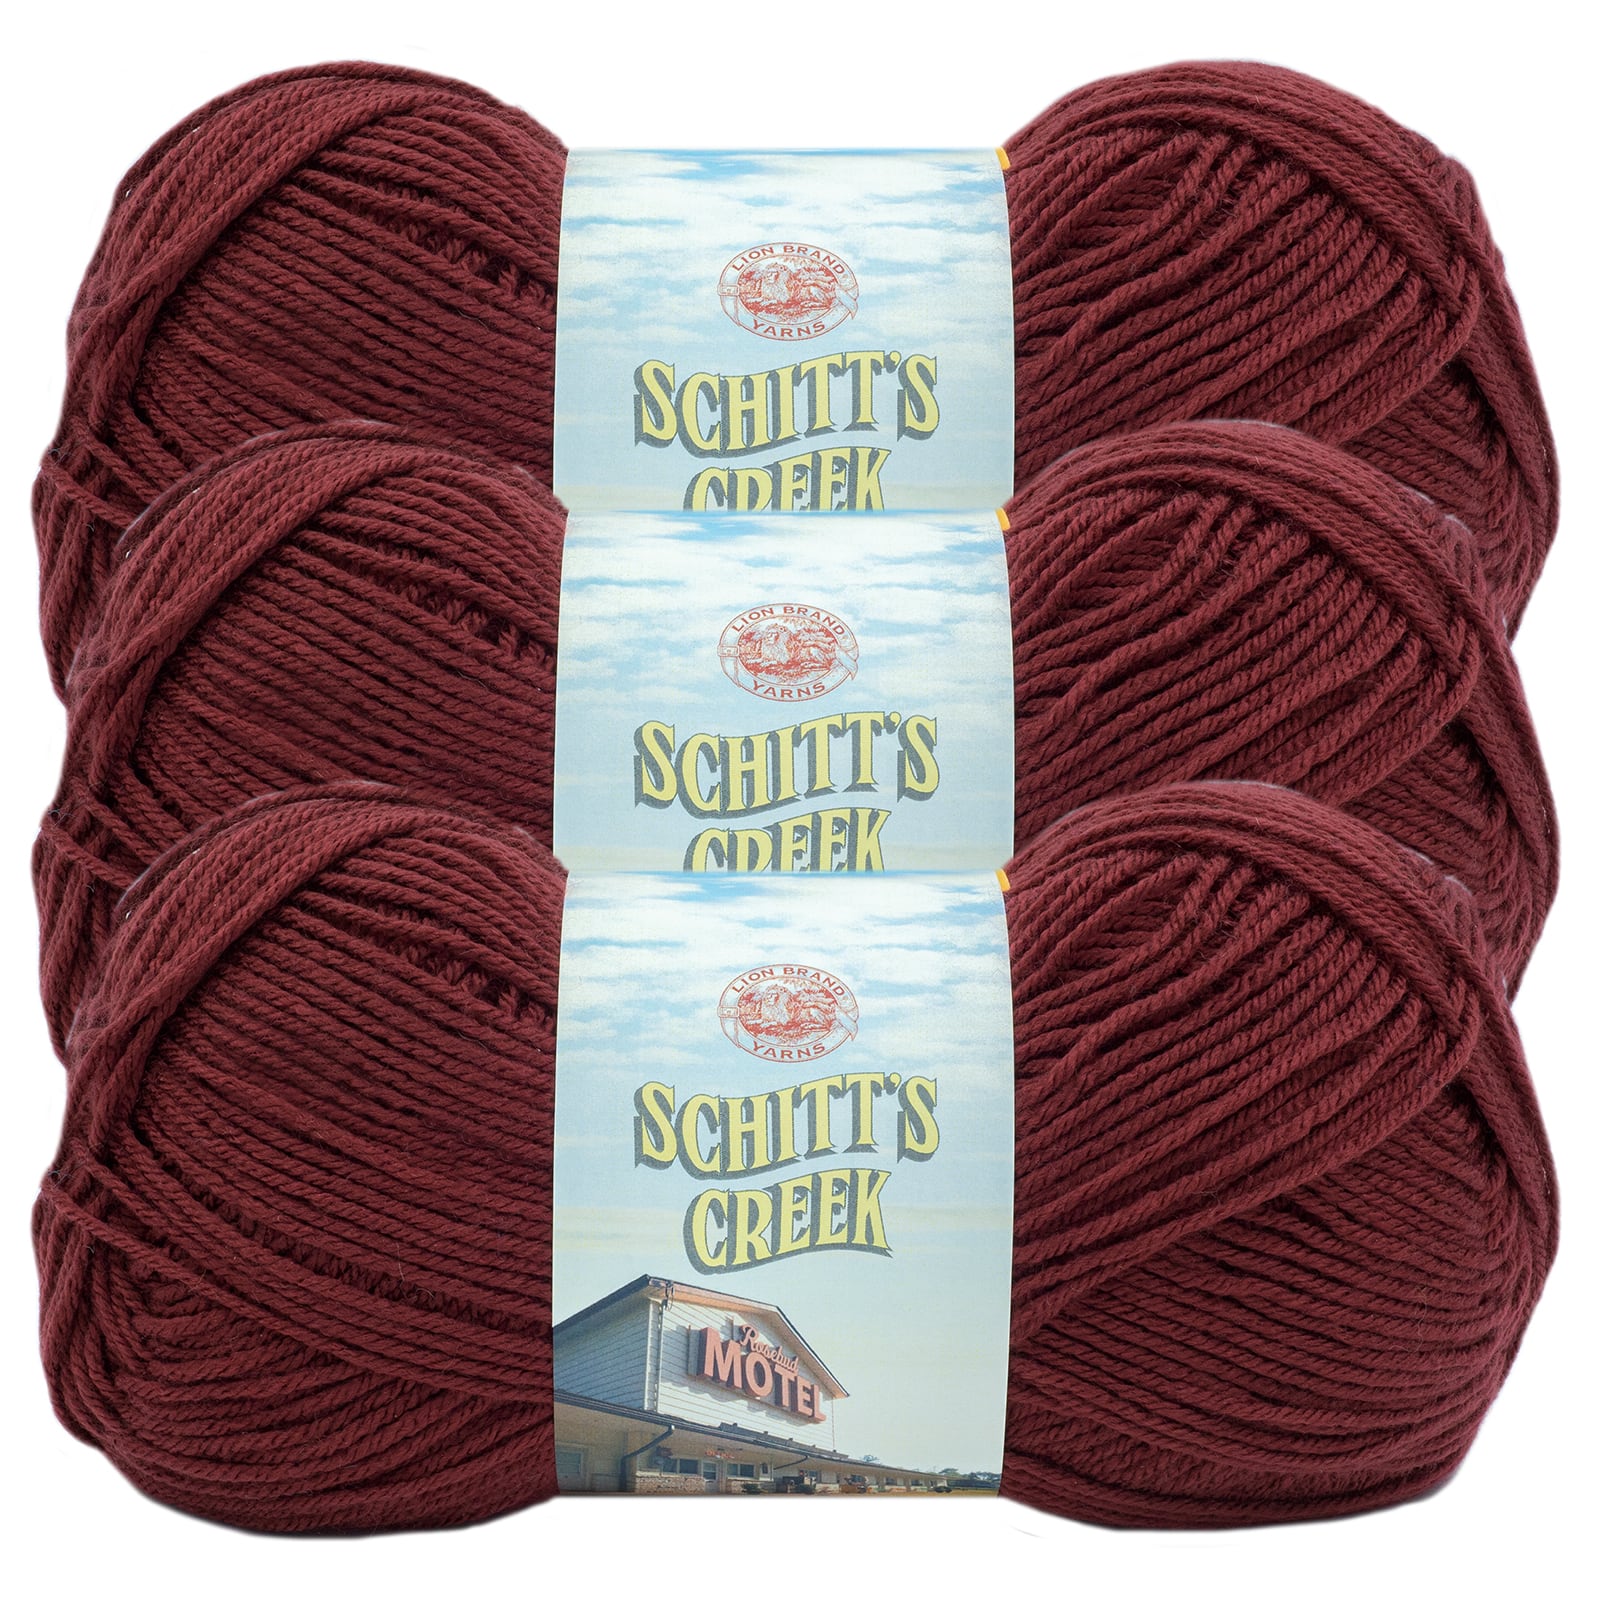 Lion Brand Yarn Schitt's Creek Yarn for Knitting, Crocheting, and Crafting, 3 Pack, Boho Brown